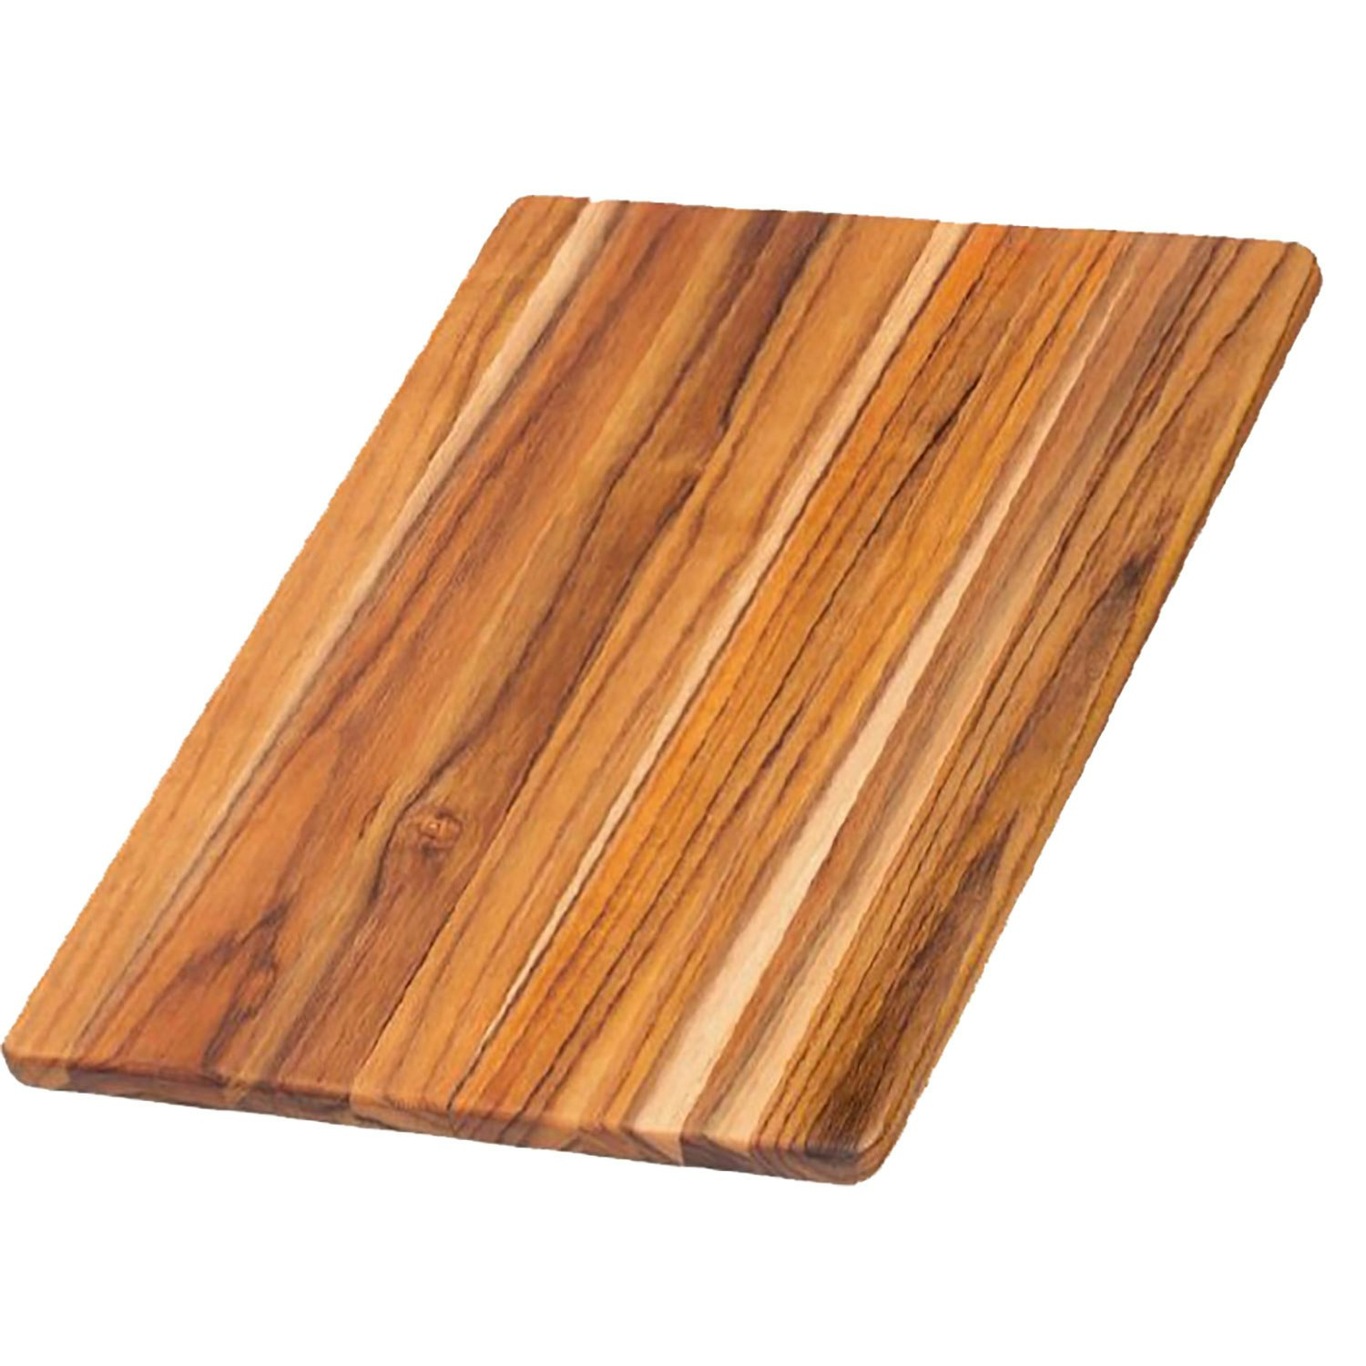 https://royaldesign.com/image/2/teakhaus-fsc-certified-teak-cutting-serving-board-small-0?w=800&quality=80